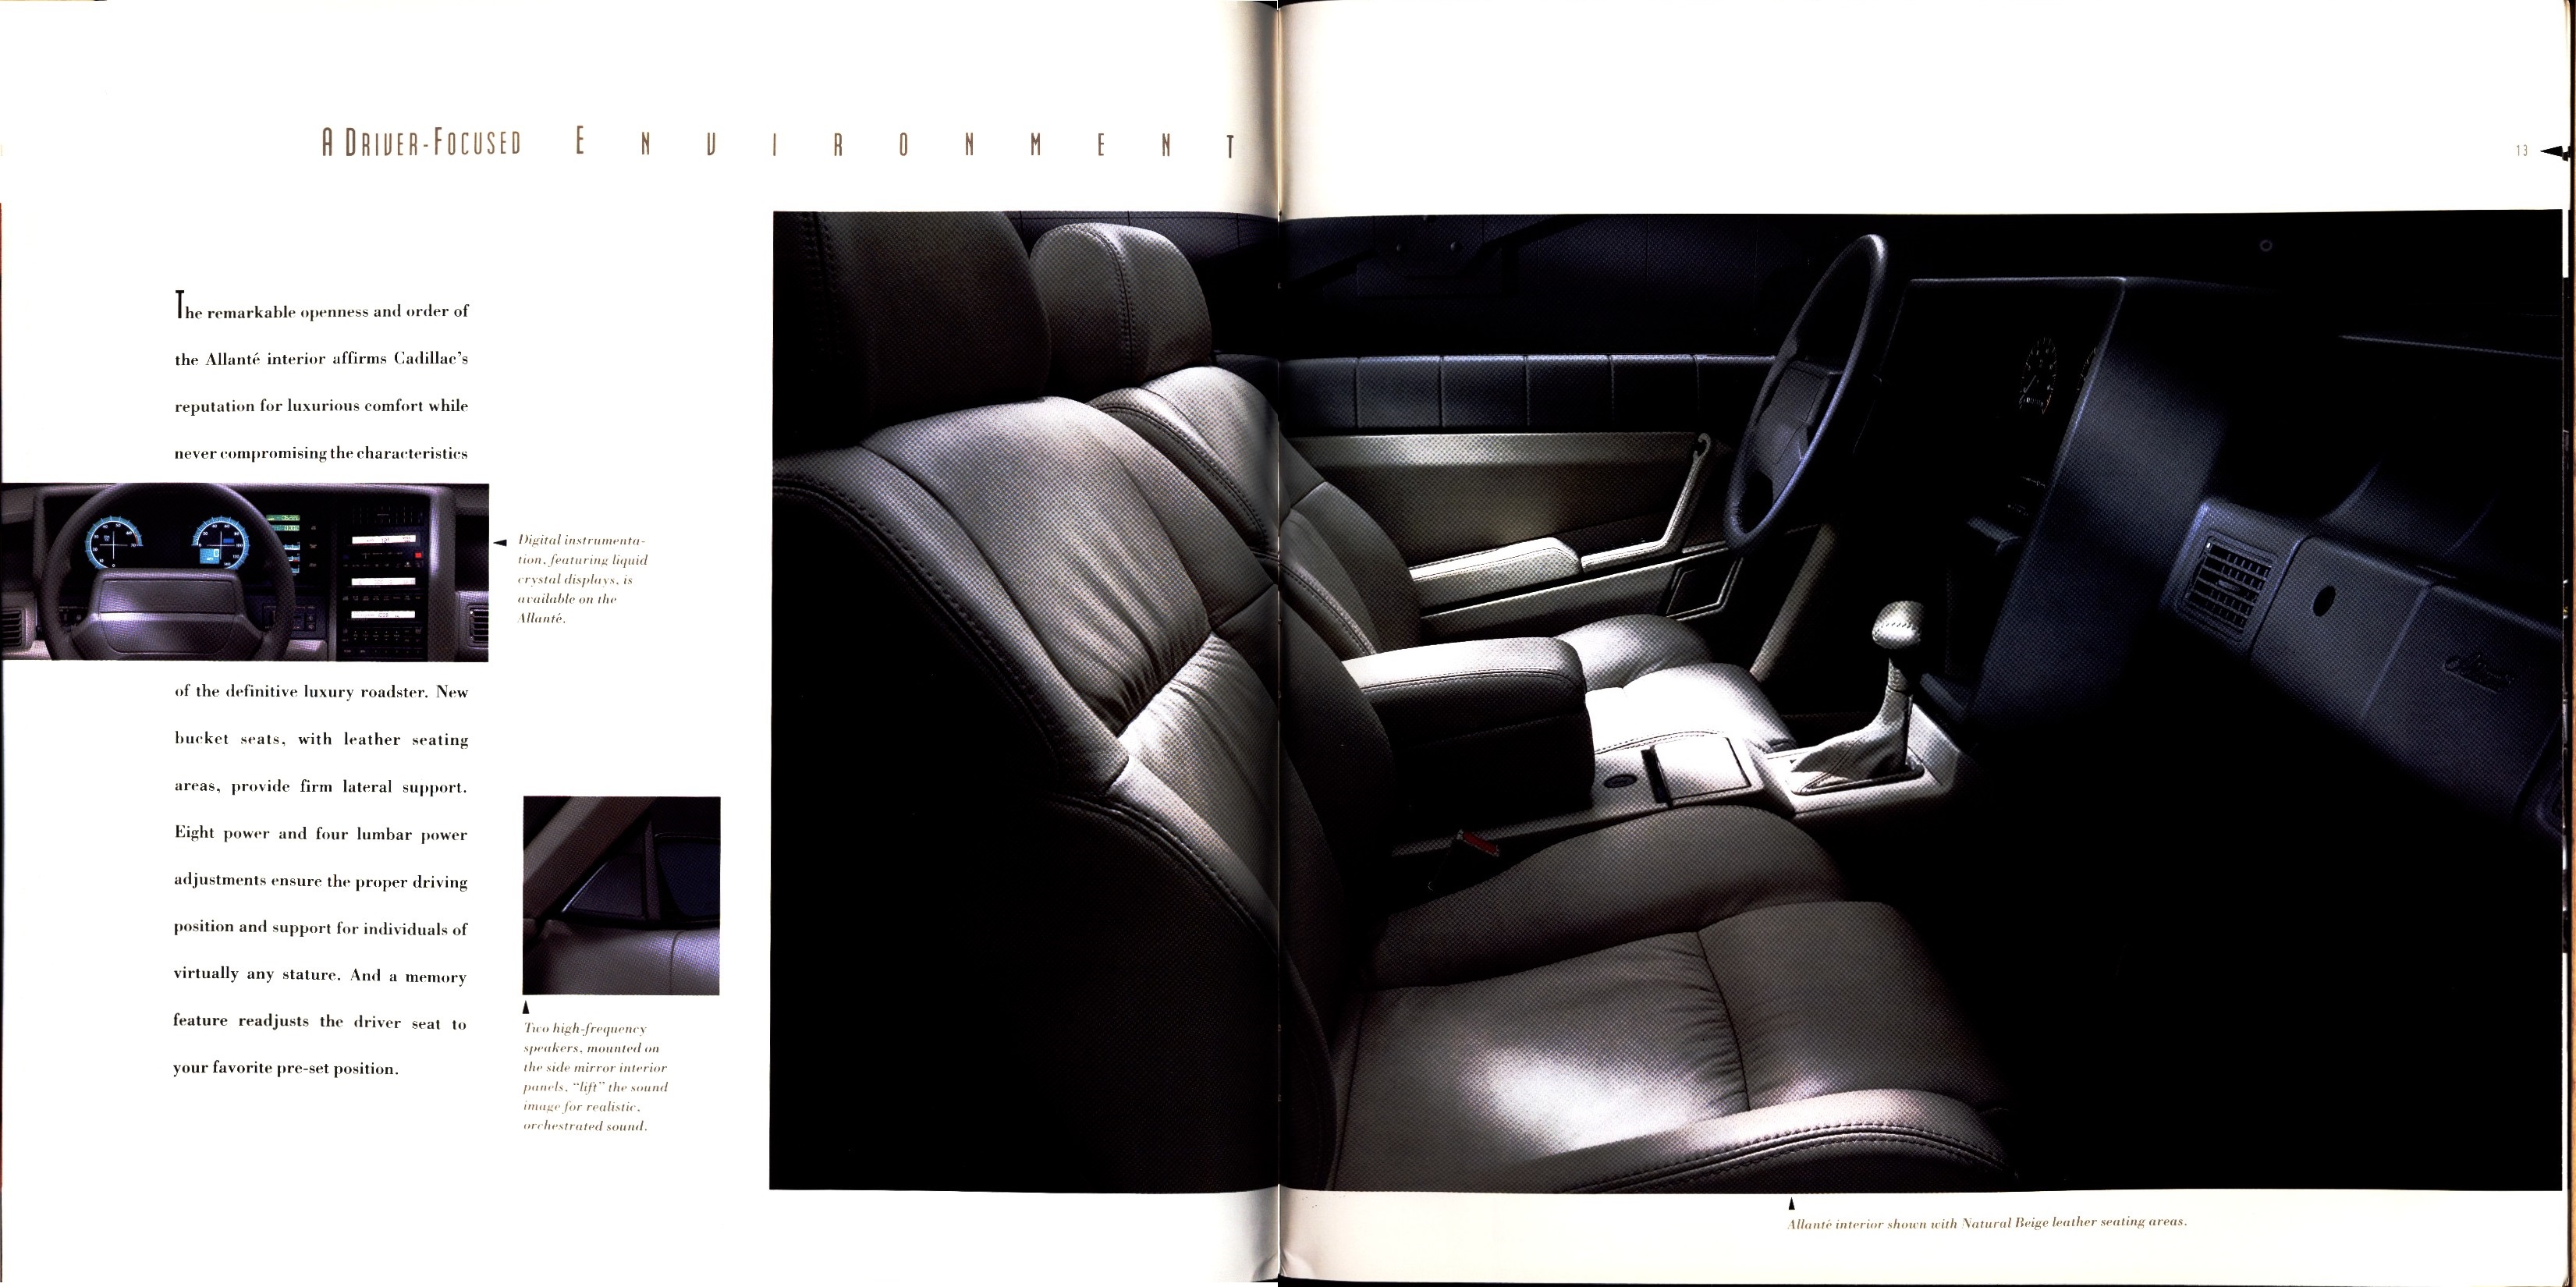 1993 Cadillac Full Line Prestige Brochure 12-13